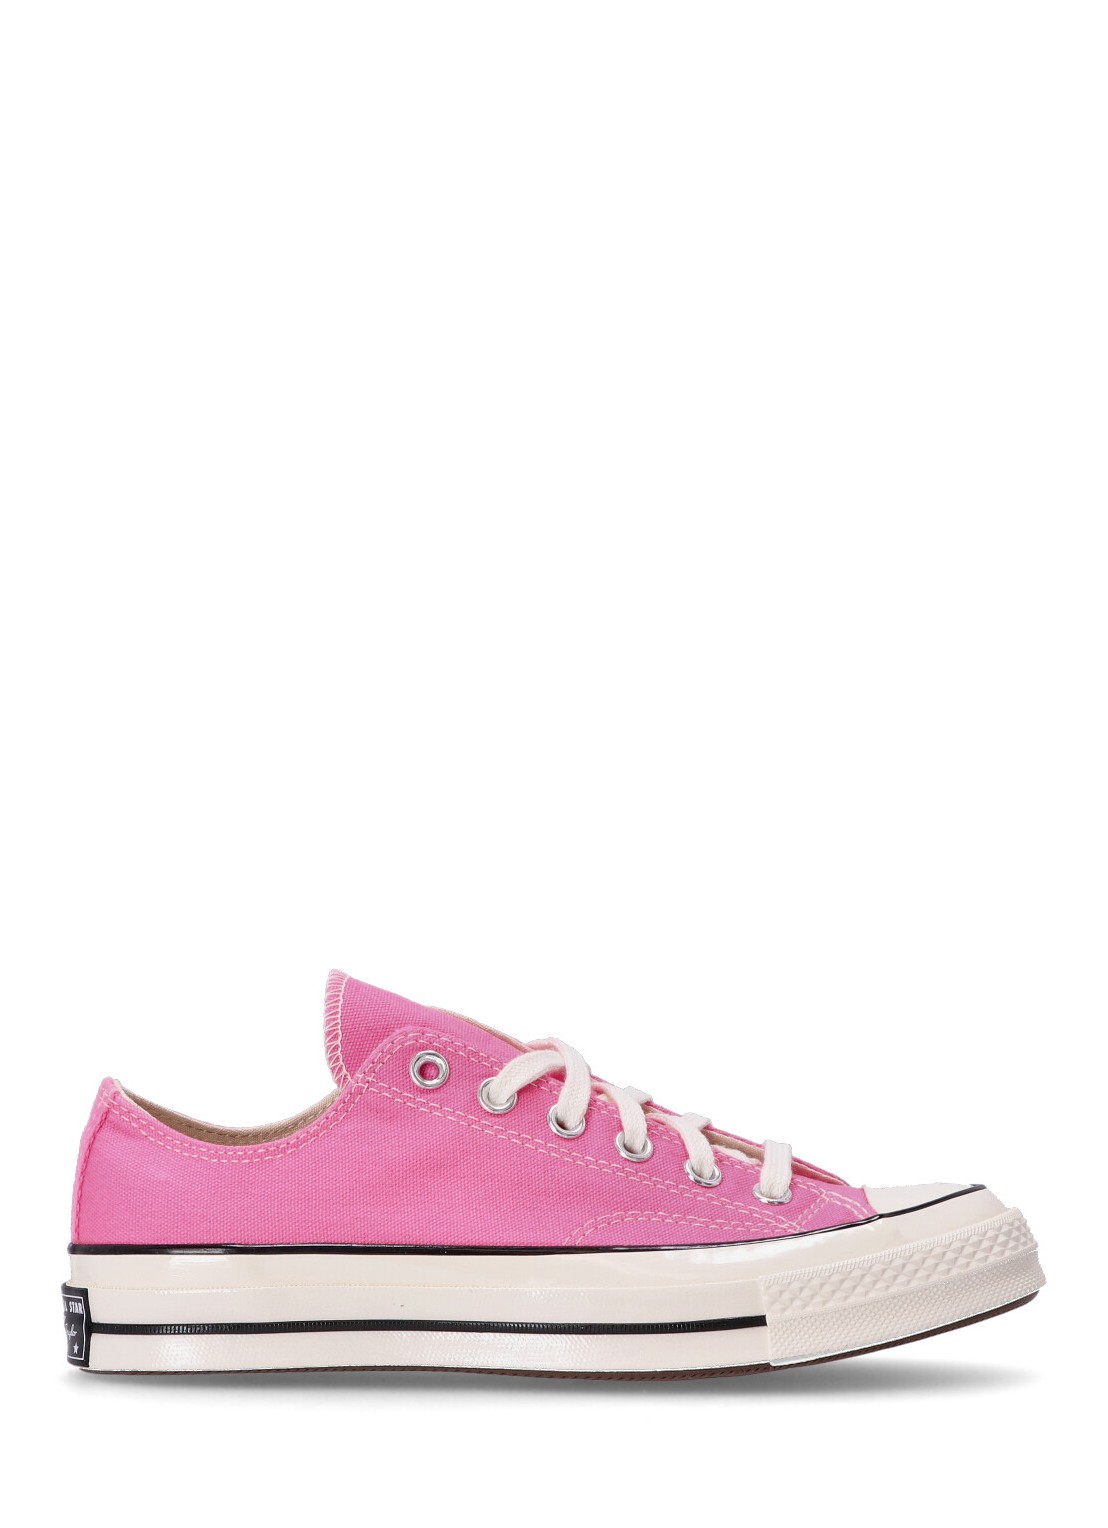 Sneaker converse sneaker woman chuck 70 a08138c pink egret black talla 41
 